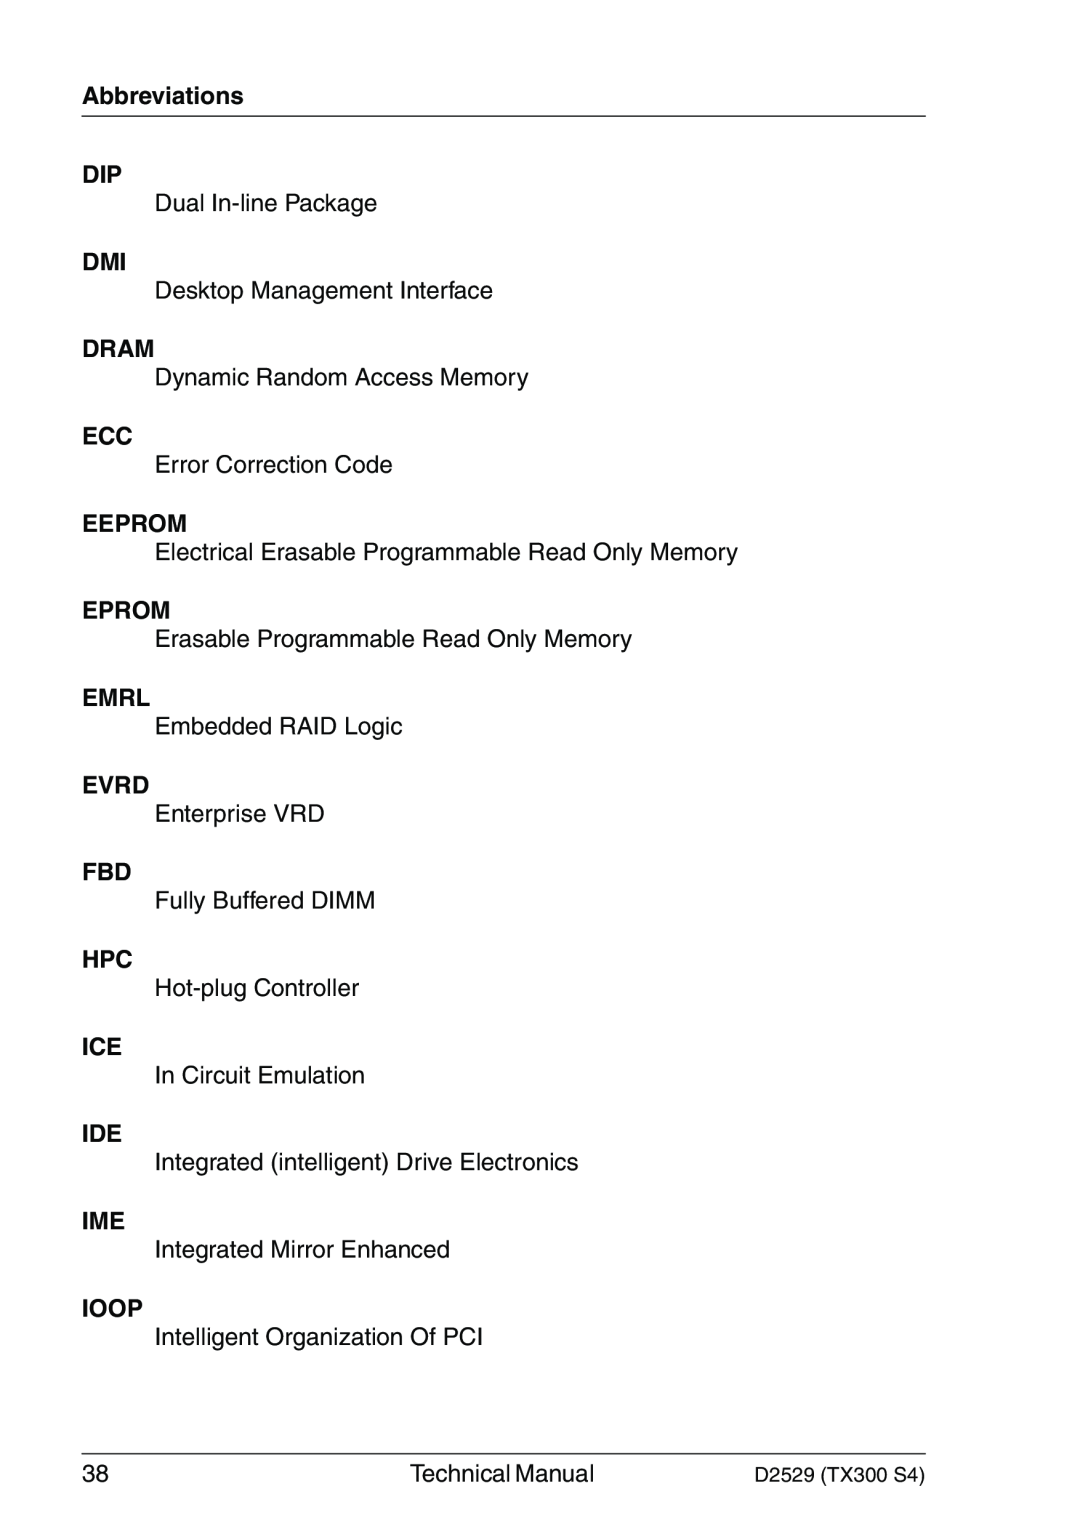 Fujitsu D2529 technical manual Abbreviations, Dram, Eeprom, Eprom, Emrl, Evrd, Ioop 